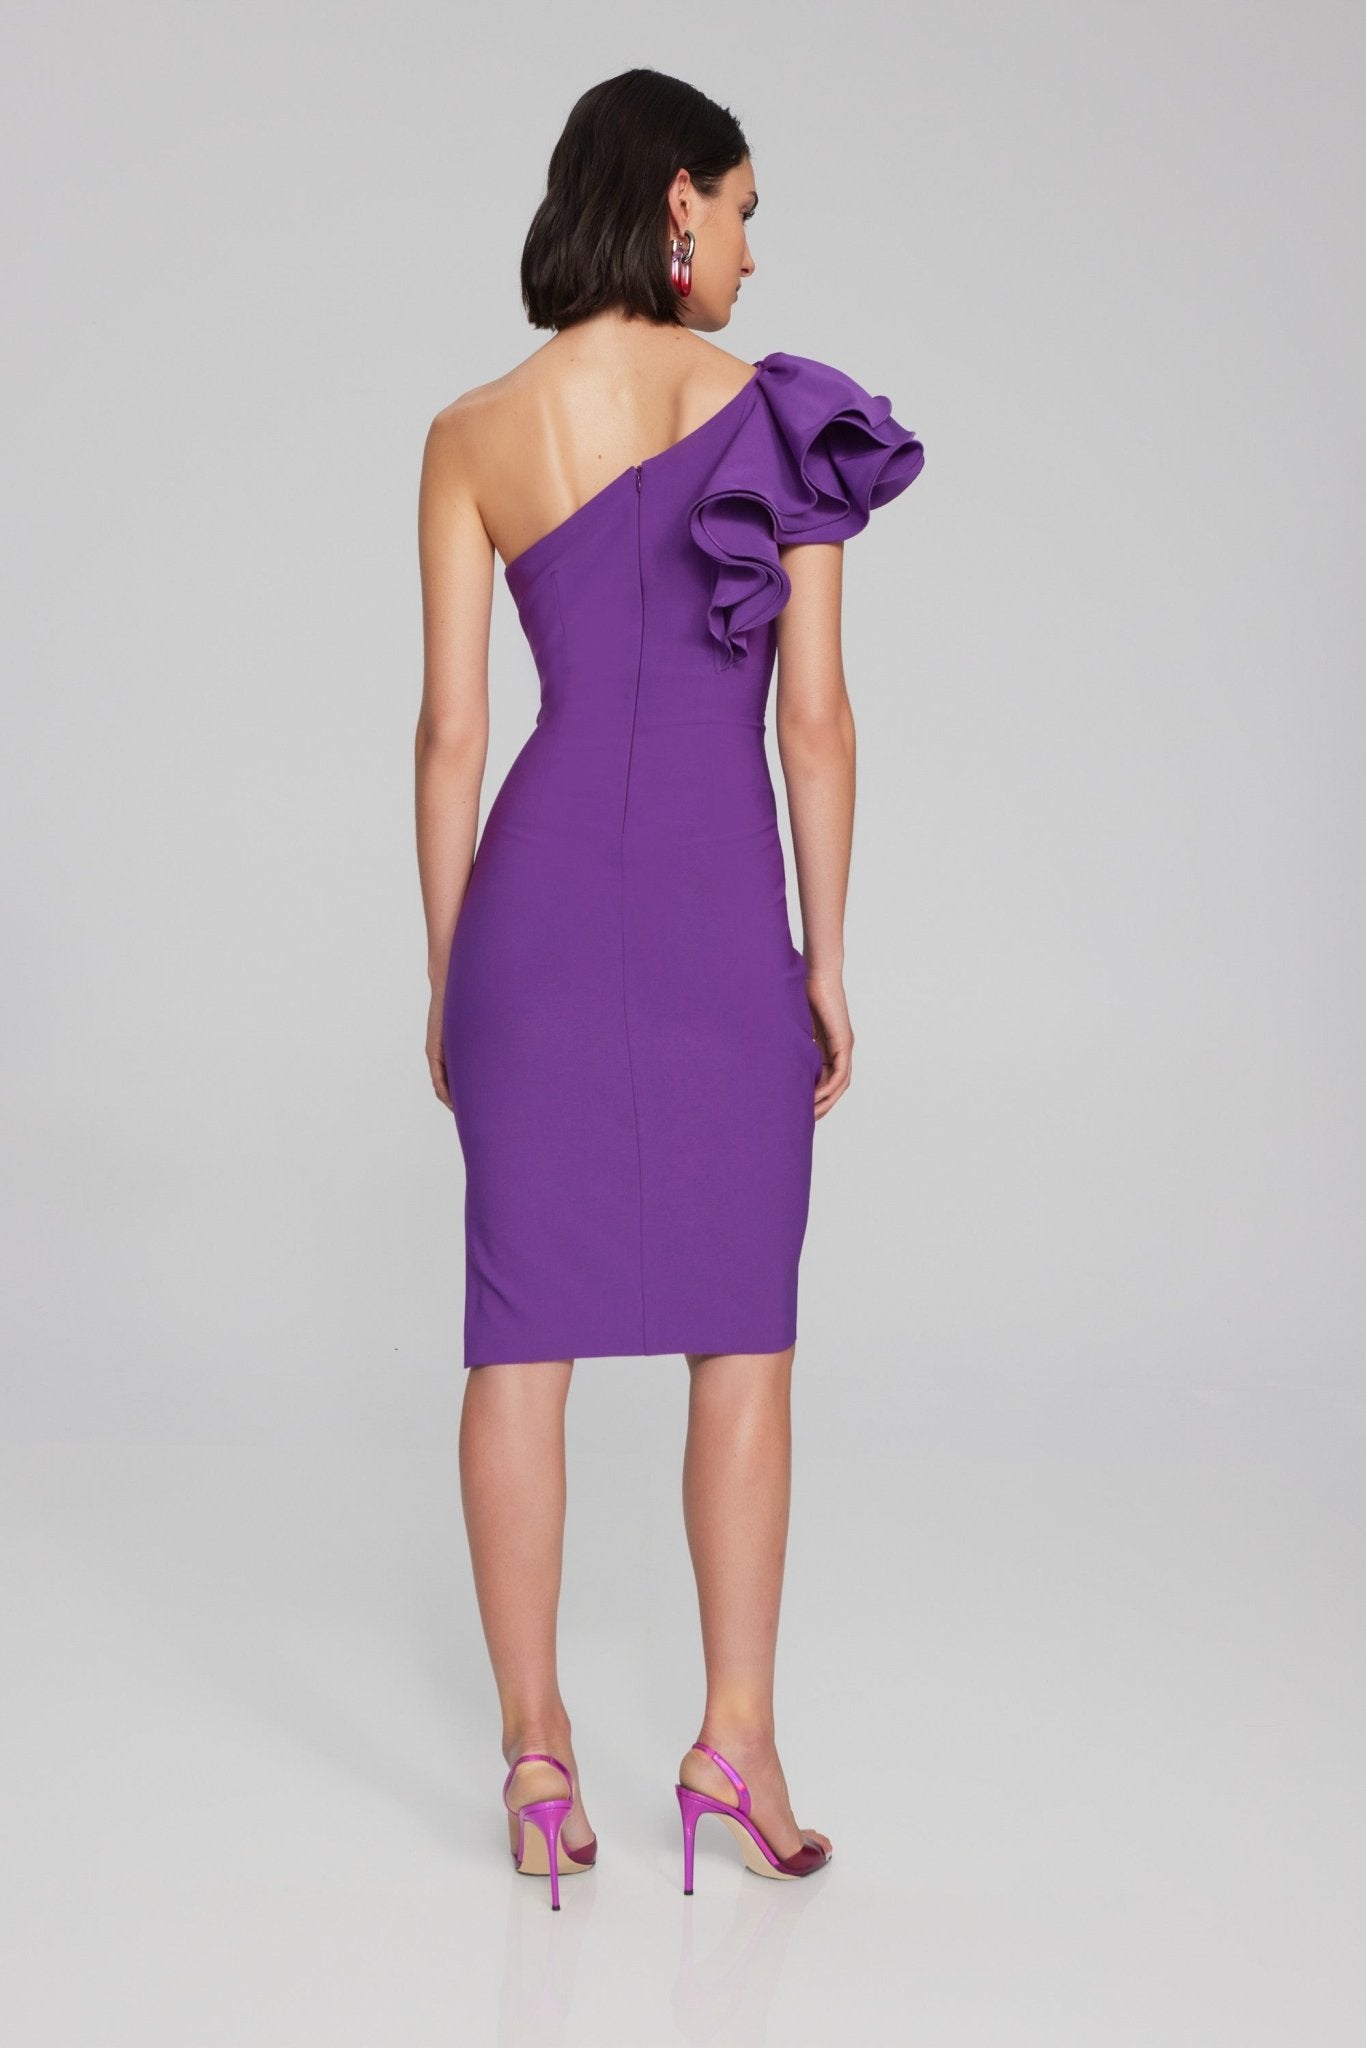 Shop Lux Twill One-Shoulder Sheath Dress Style 241755│ Majesty - Joseph Ribkoff